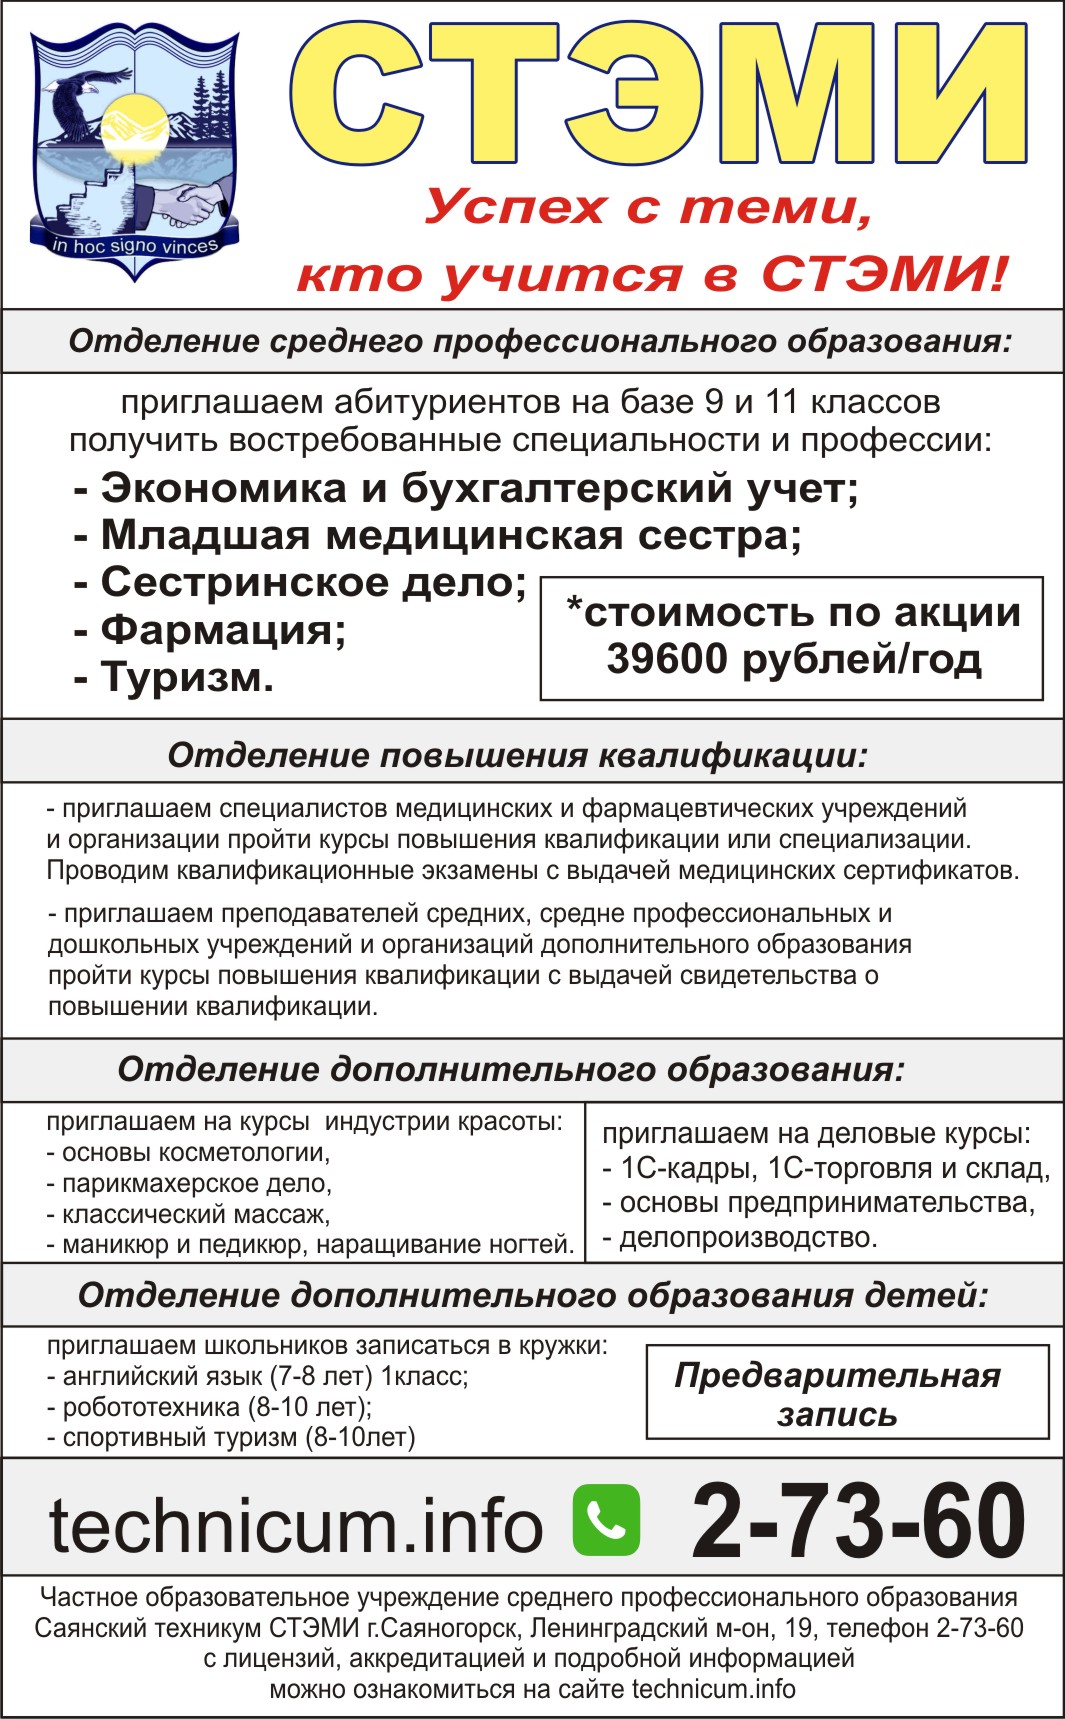 Саяногорск Инфо - reklama-gazety-2016.jpg, Скачано: 290